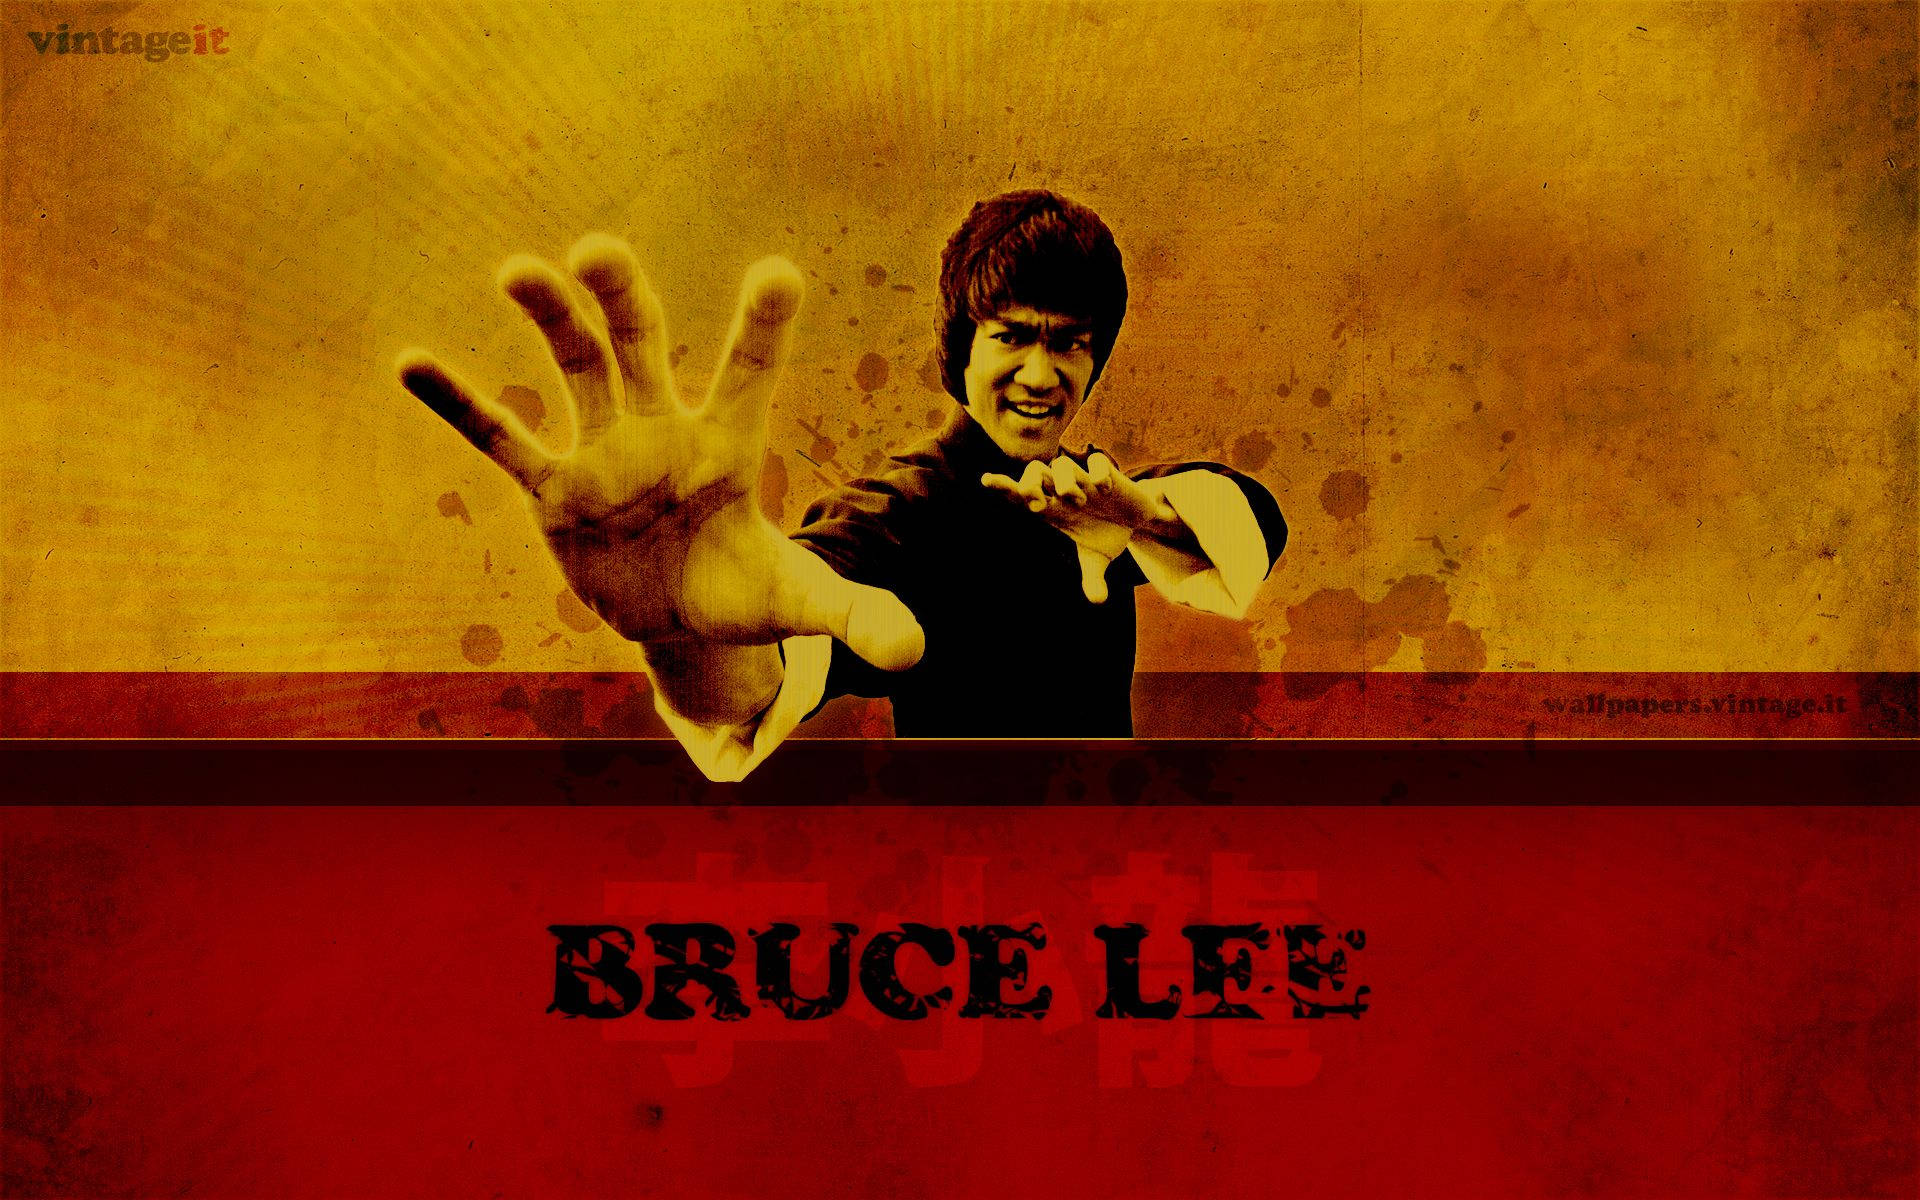 Bruce Lee Wallpaper - Free Desktop Hd Ipad Iphone Wallpaper Background